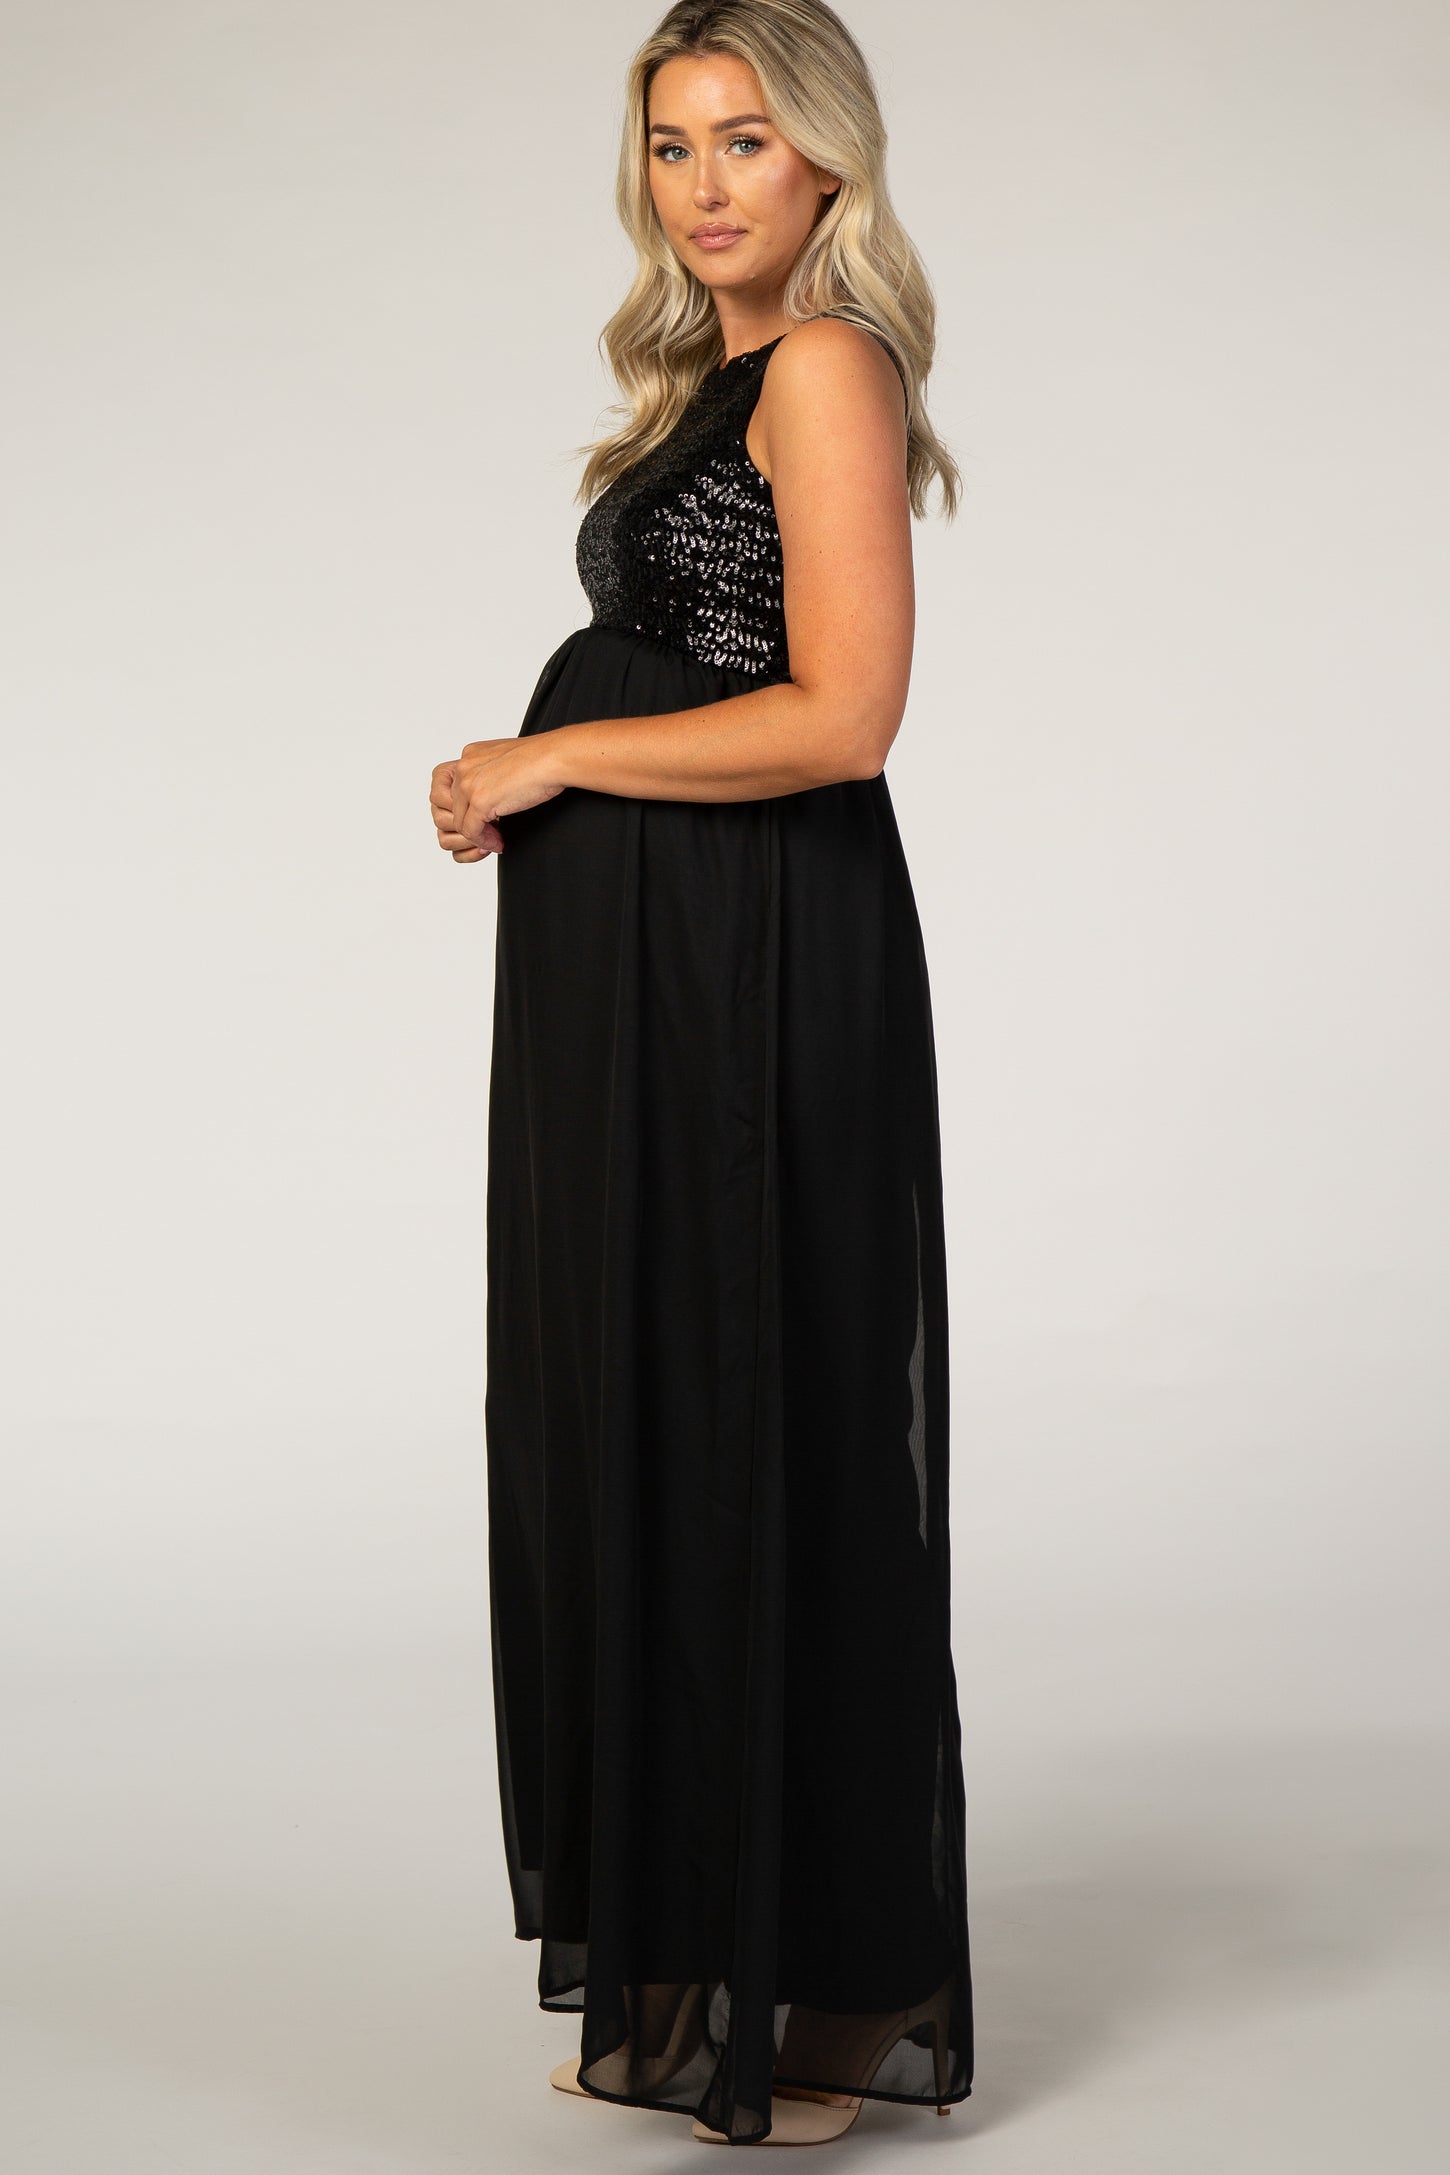 Black Sequin Top Chiffon Sleeveless Maternity Evening Gown